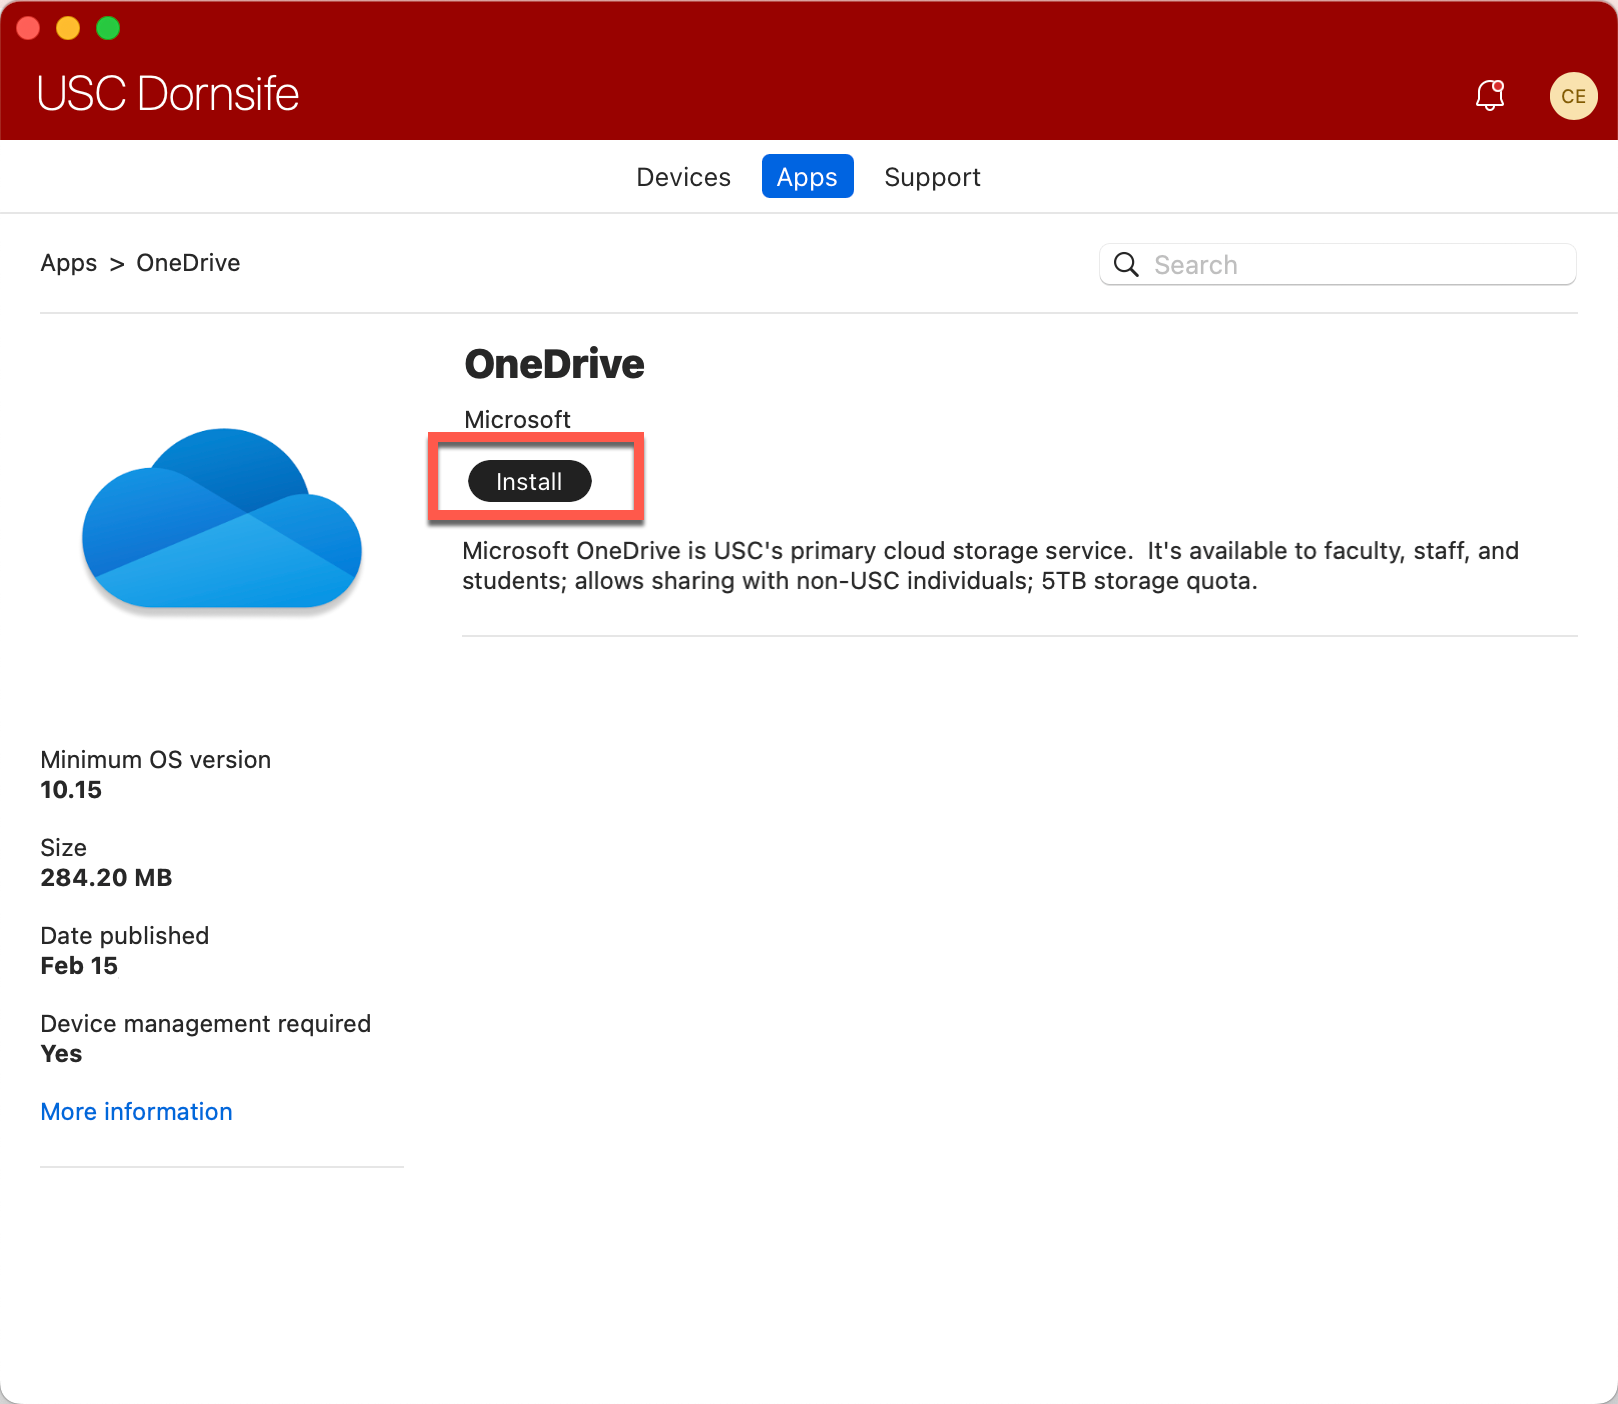 Install OneDrive in Company Portal